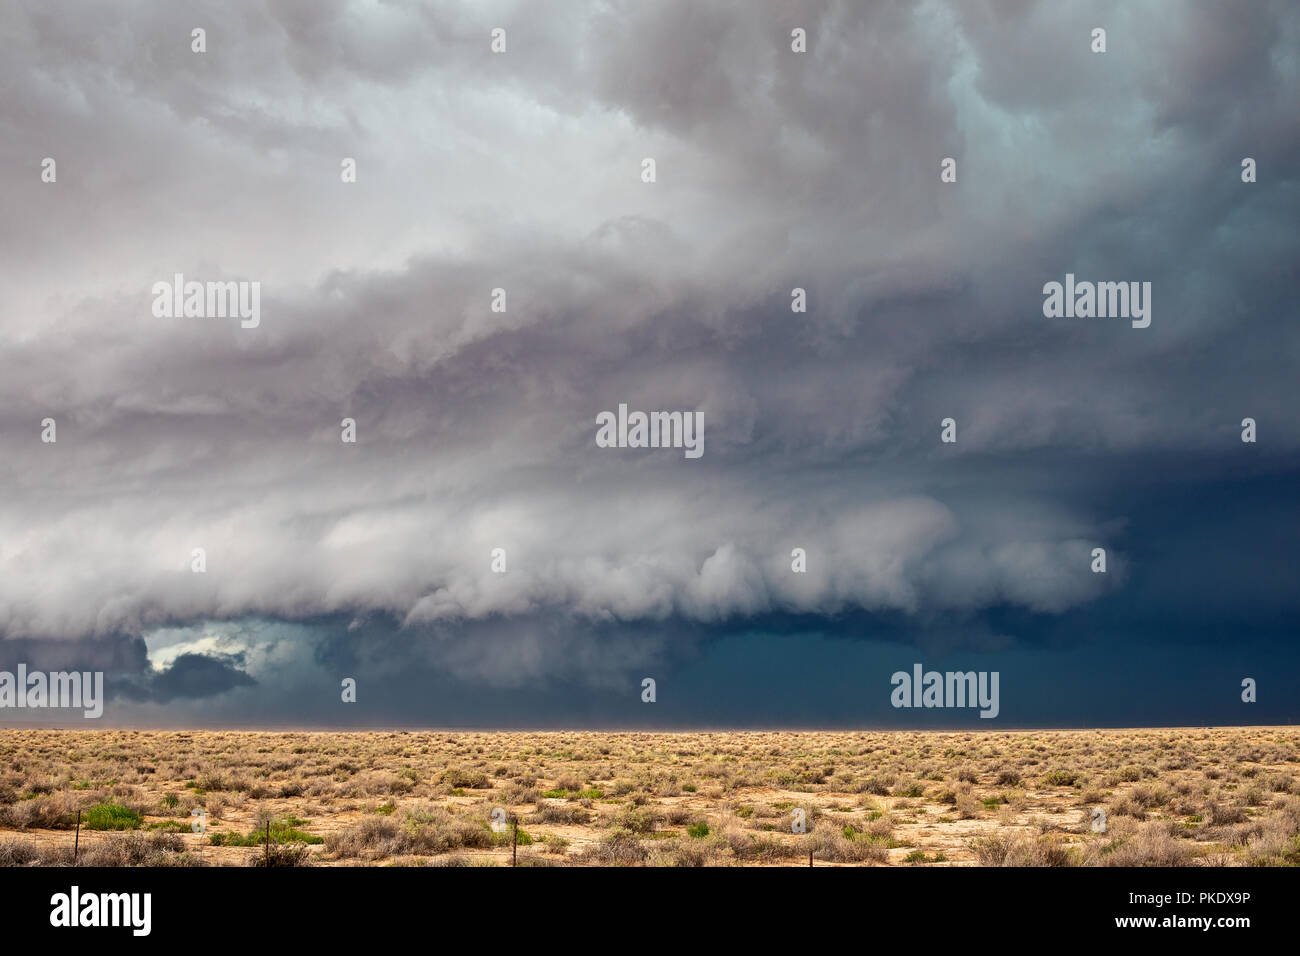 Supercell thunderstorm with wall cloud near Leupp, Arizona Stock Photo